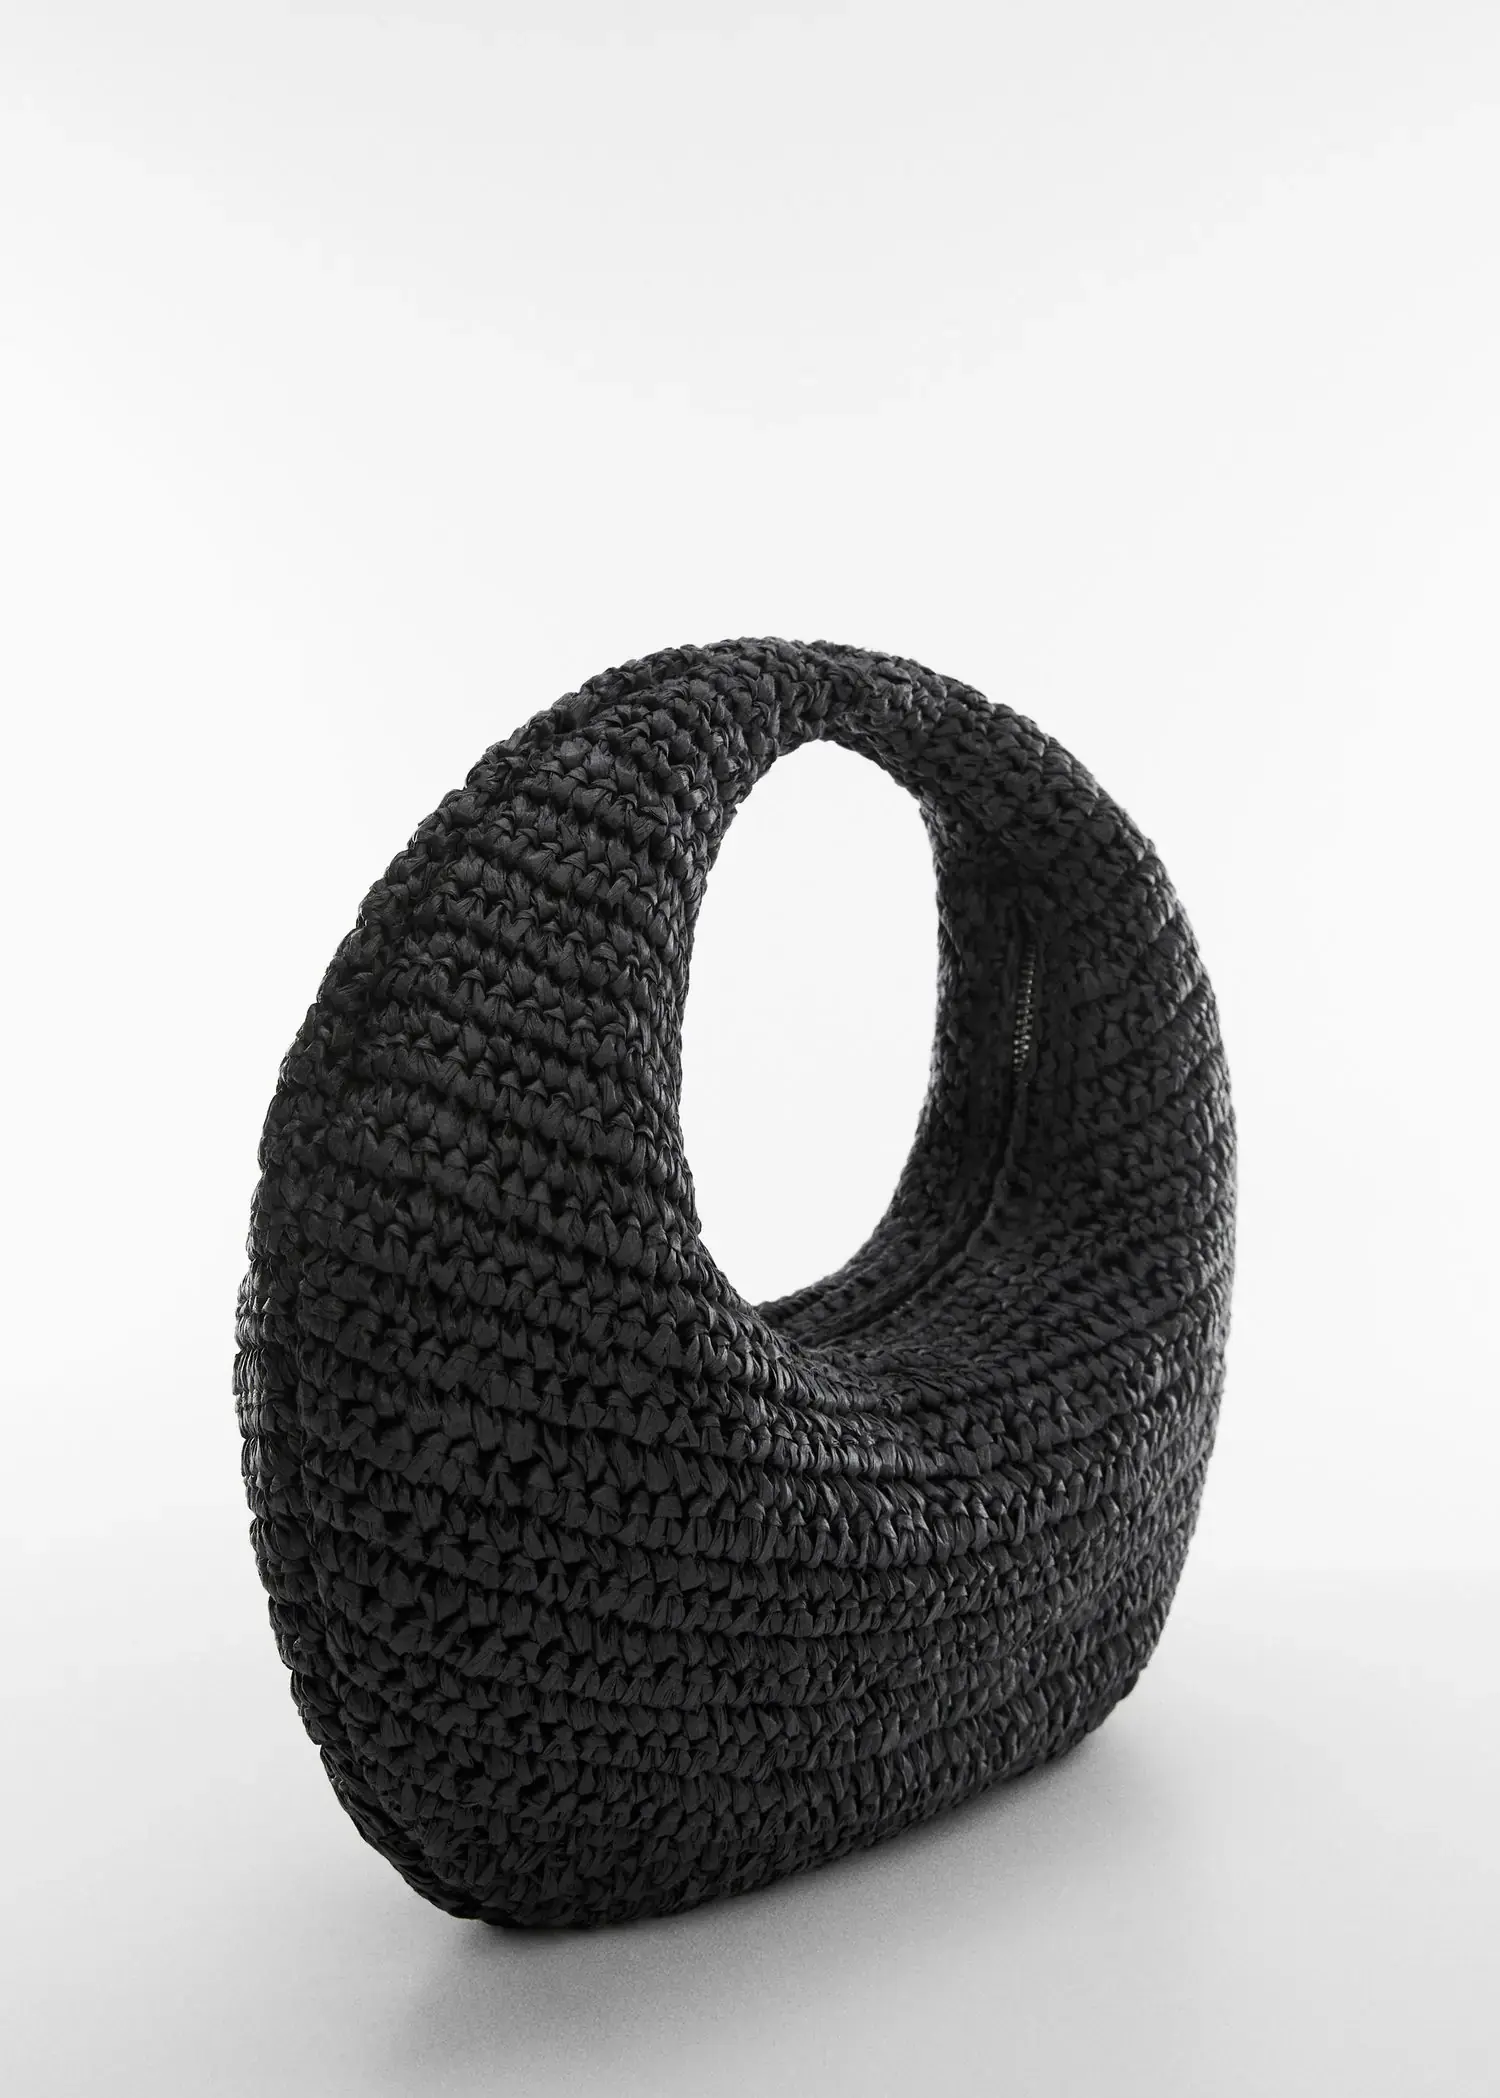 Mango Round natural fiber bag. a close-up of a black crocheted bag. 